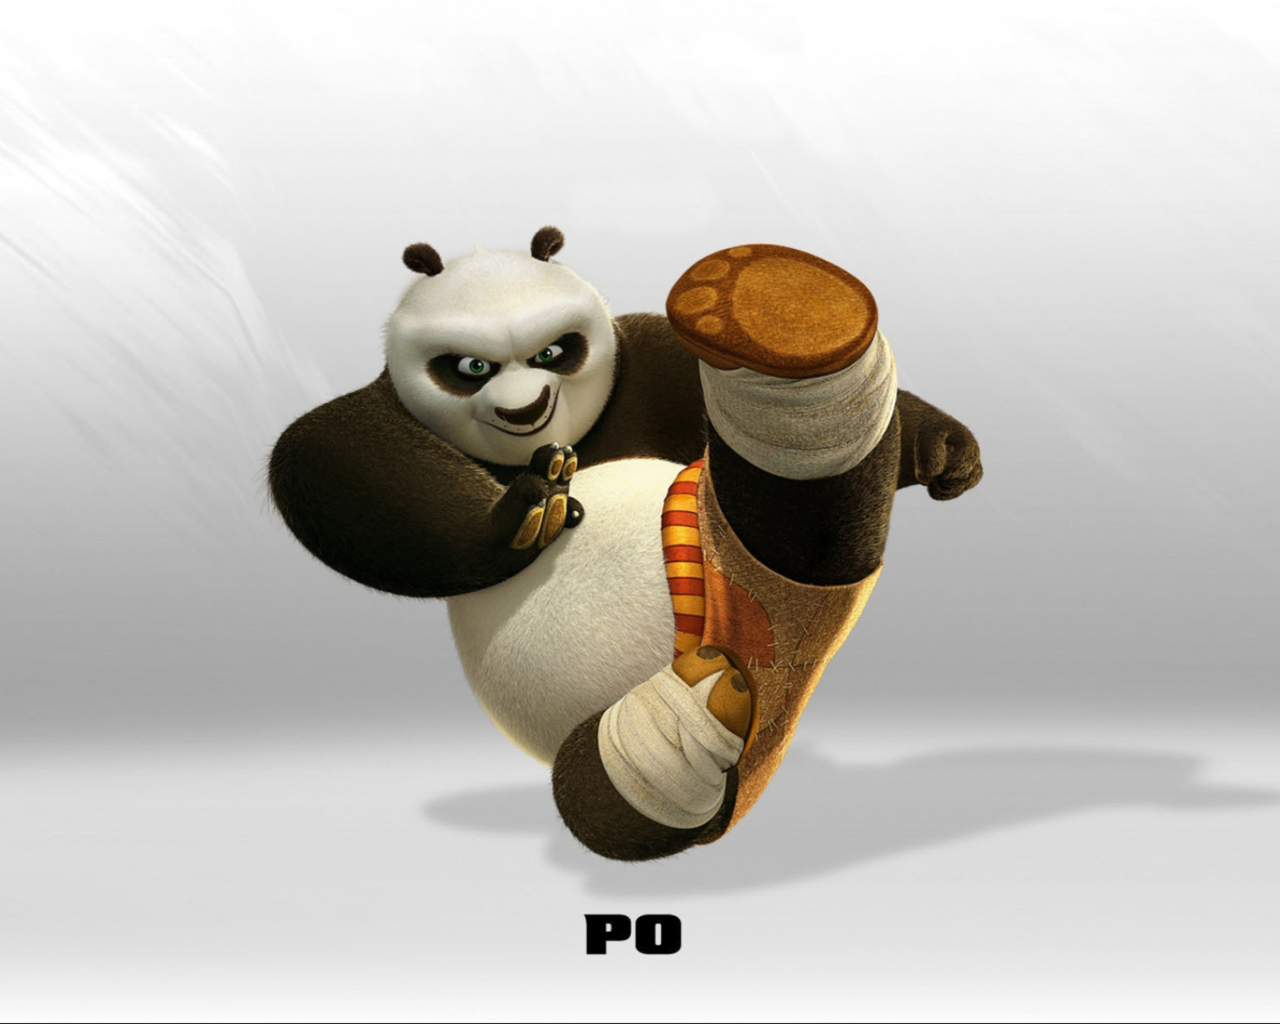 Das Kung Fu Panda Wallpaper 1280x1024